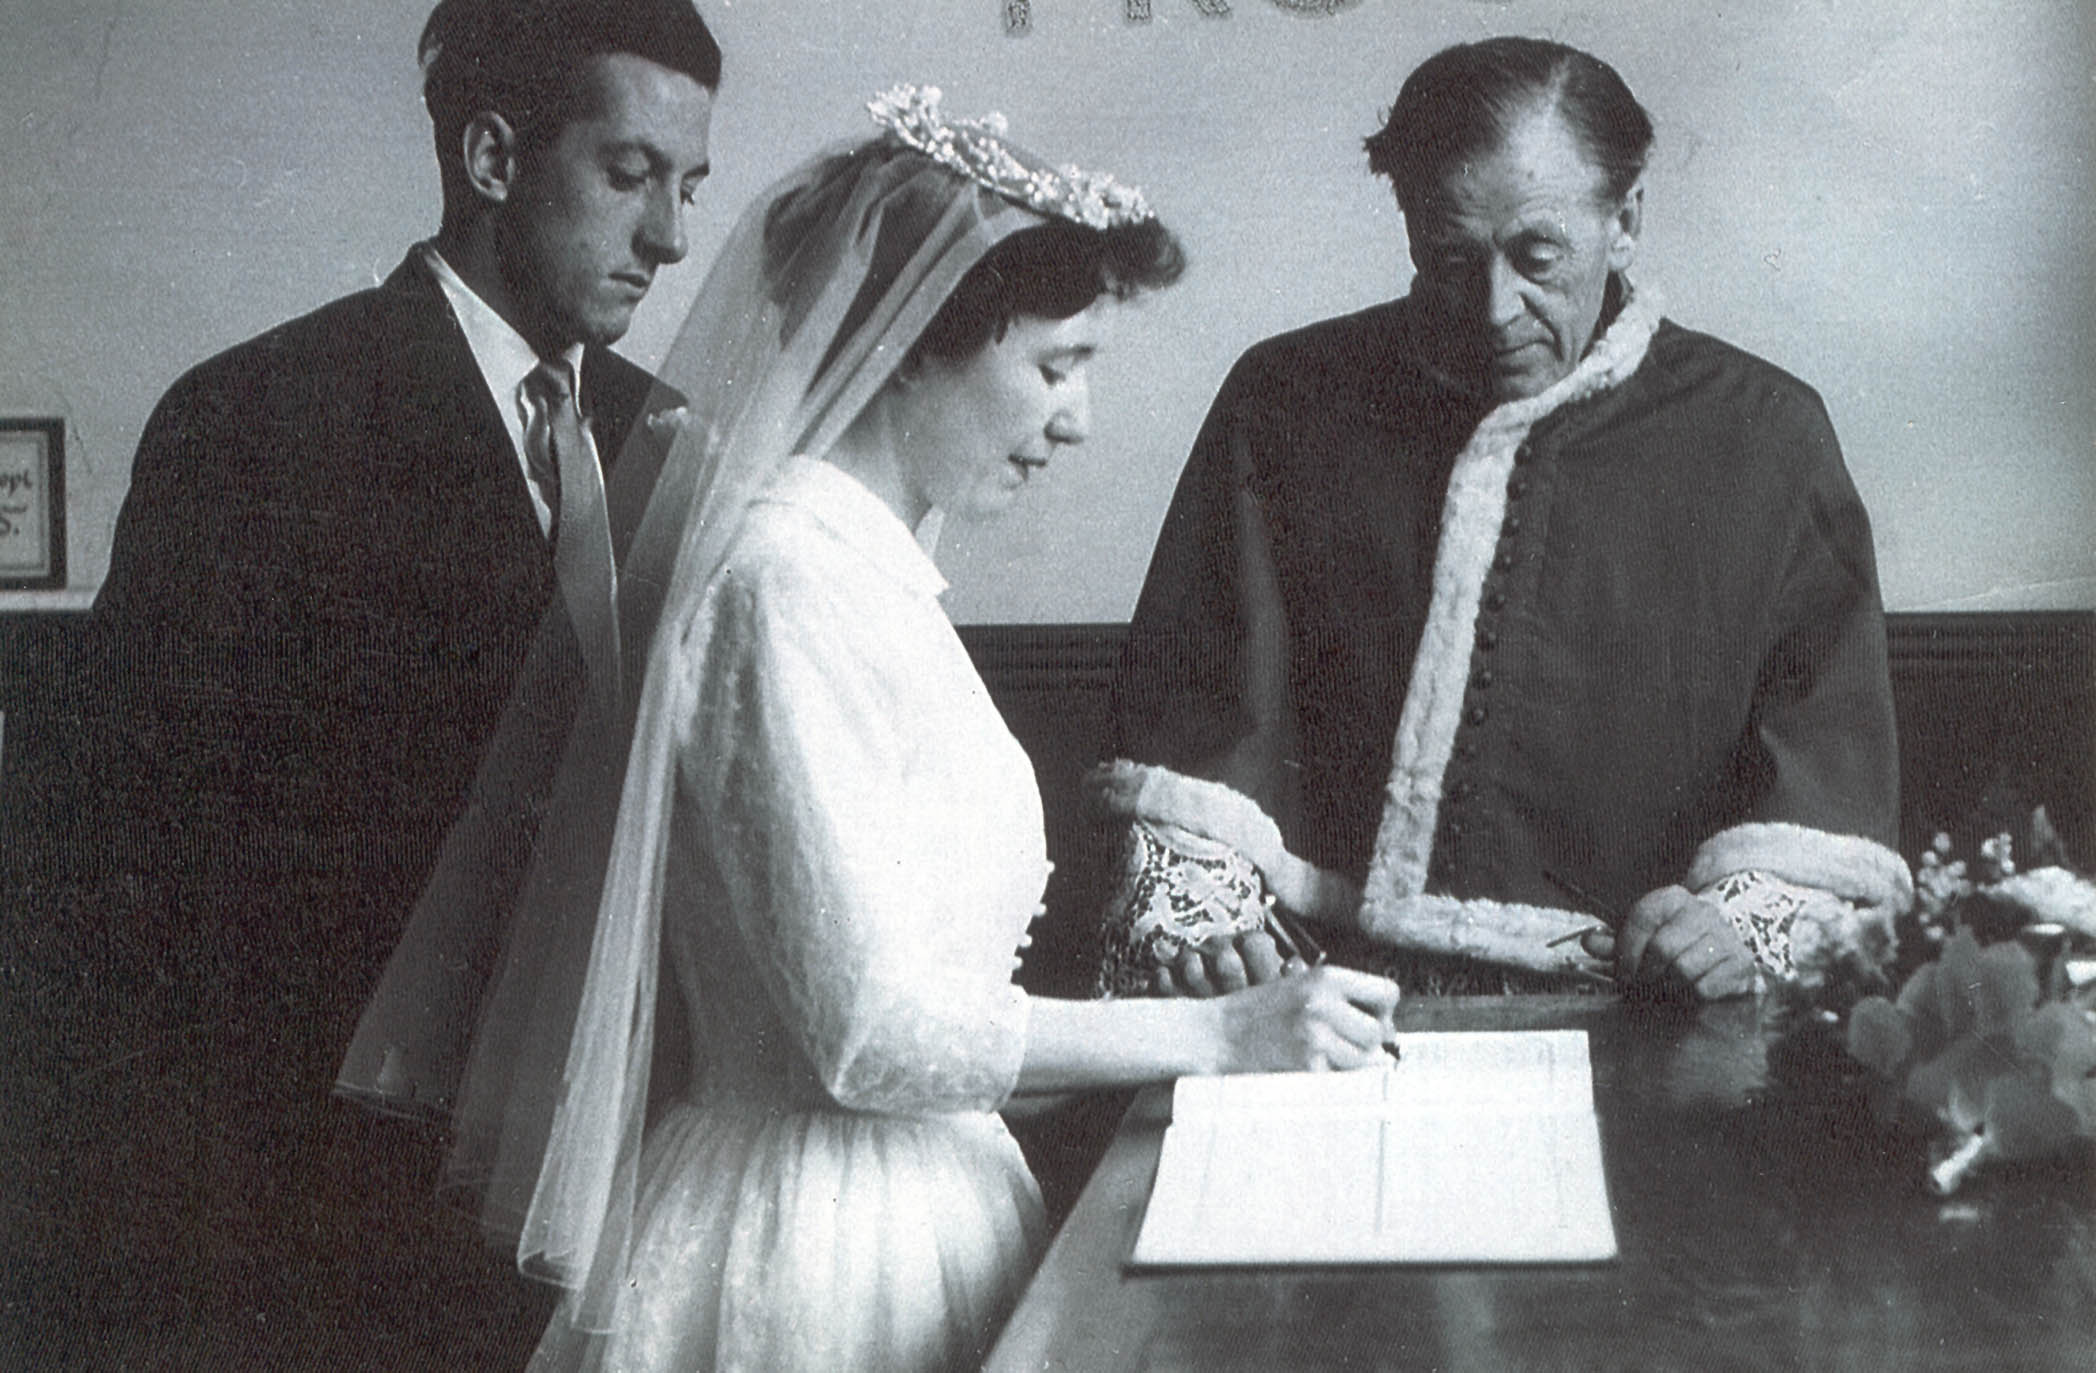 Kimpton wedding 1957